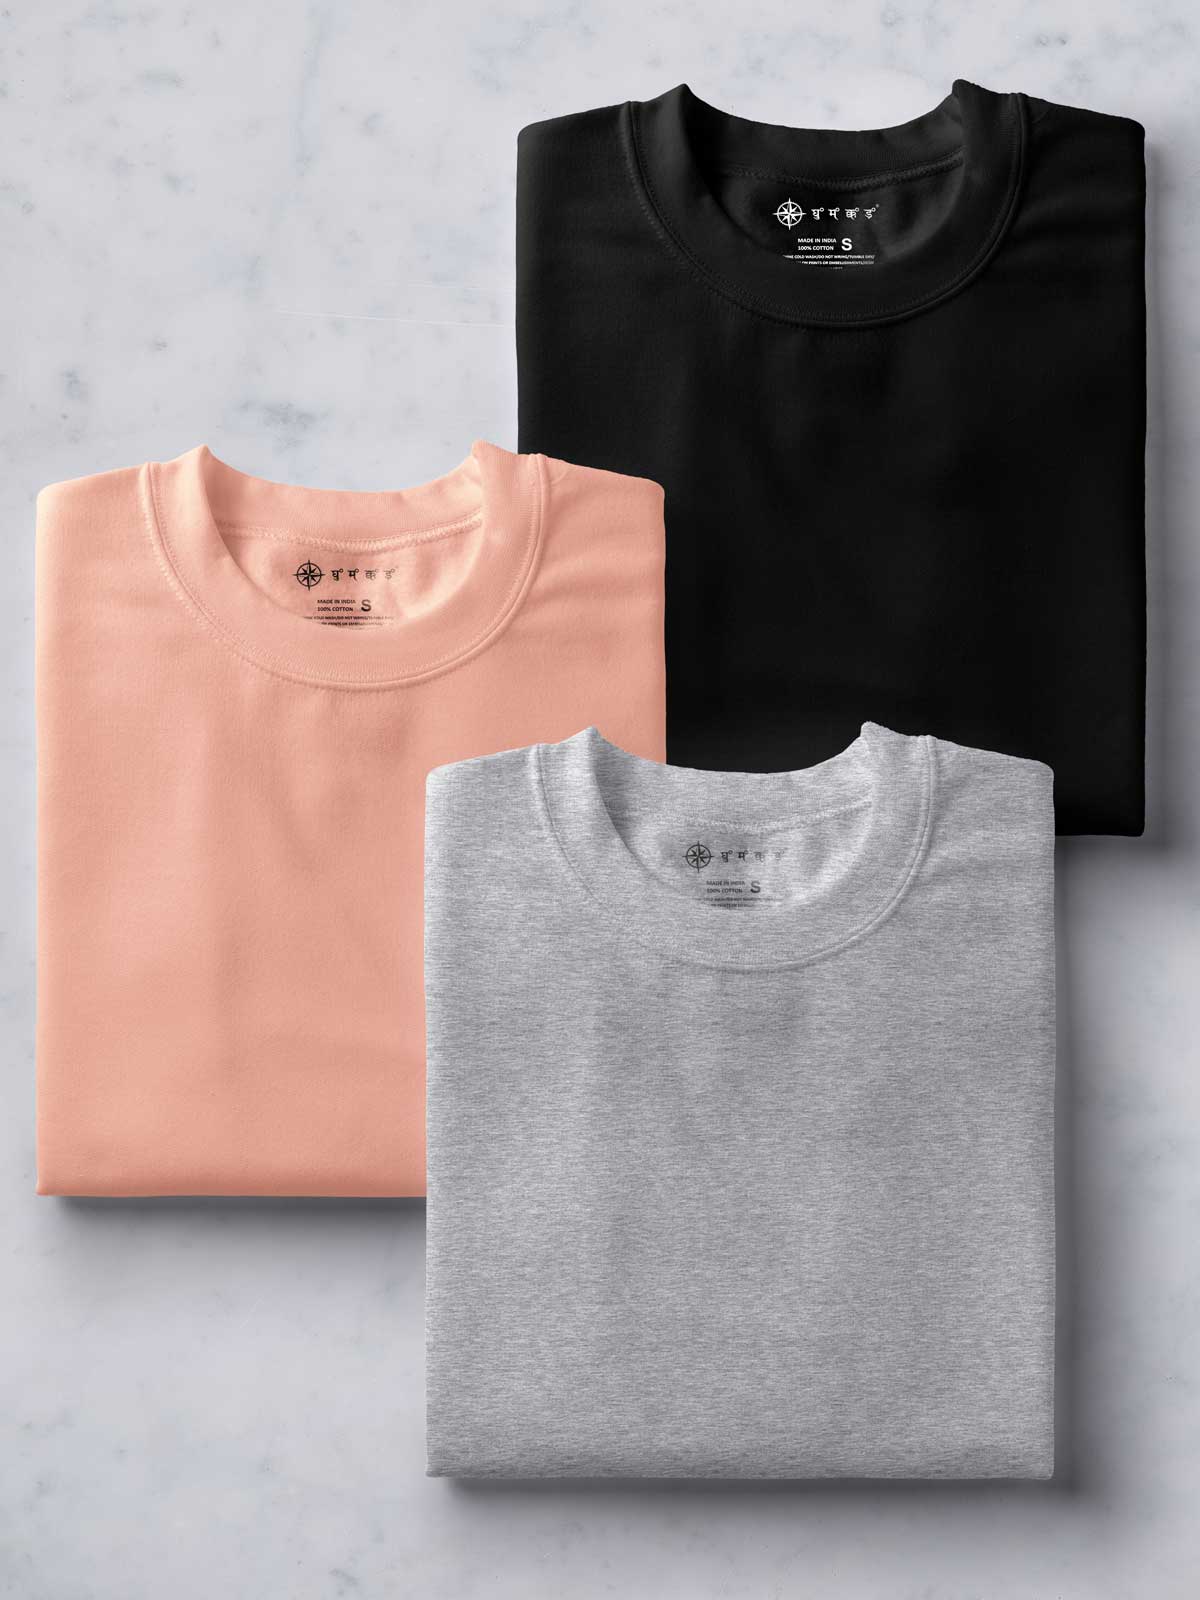 Black, Peach & Light Grey  Unisex Plain T shirt Combo by shopghumakkad